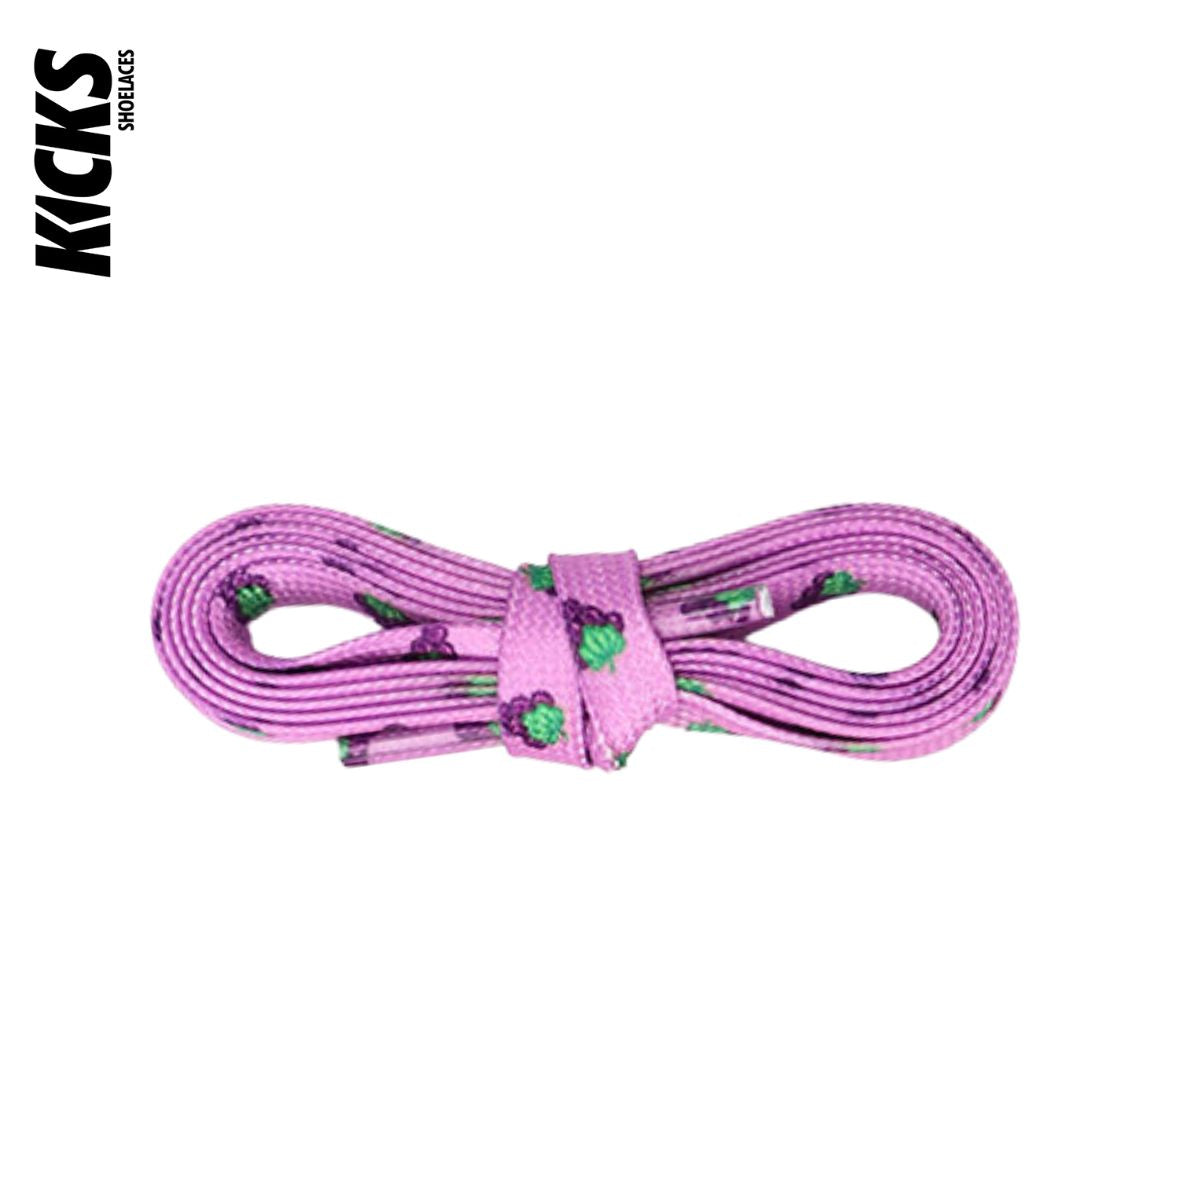 Fruit Shoelaces - Kicks Shoelaces